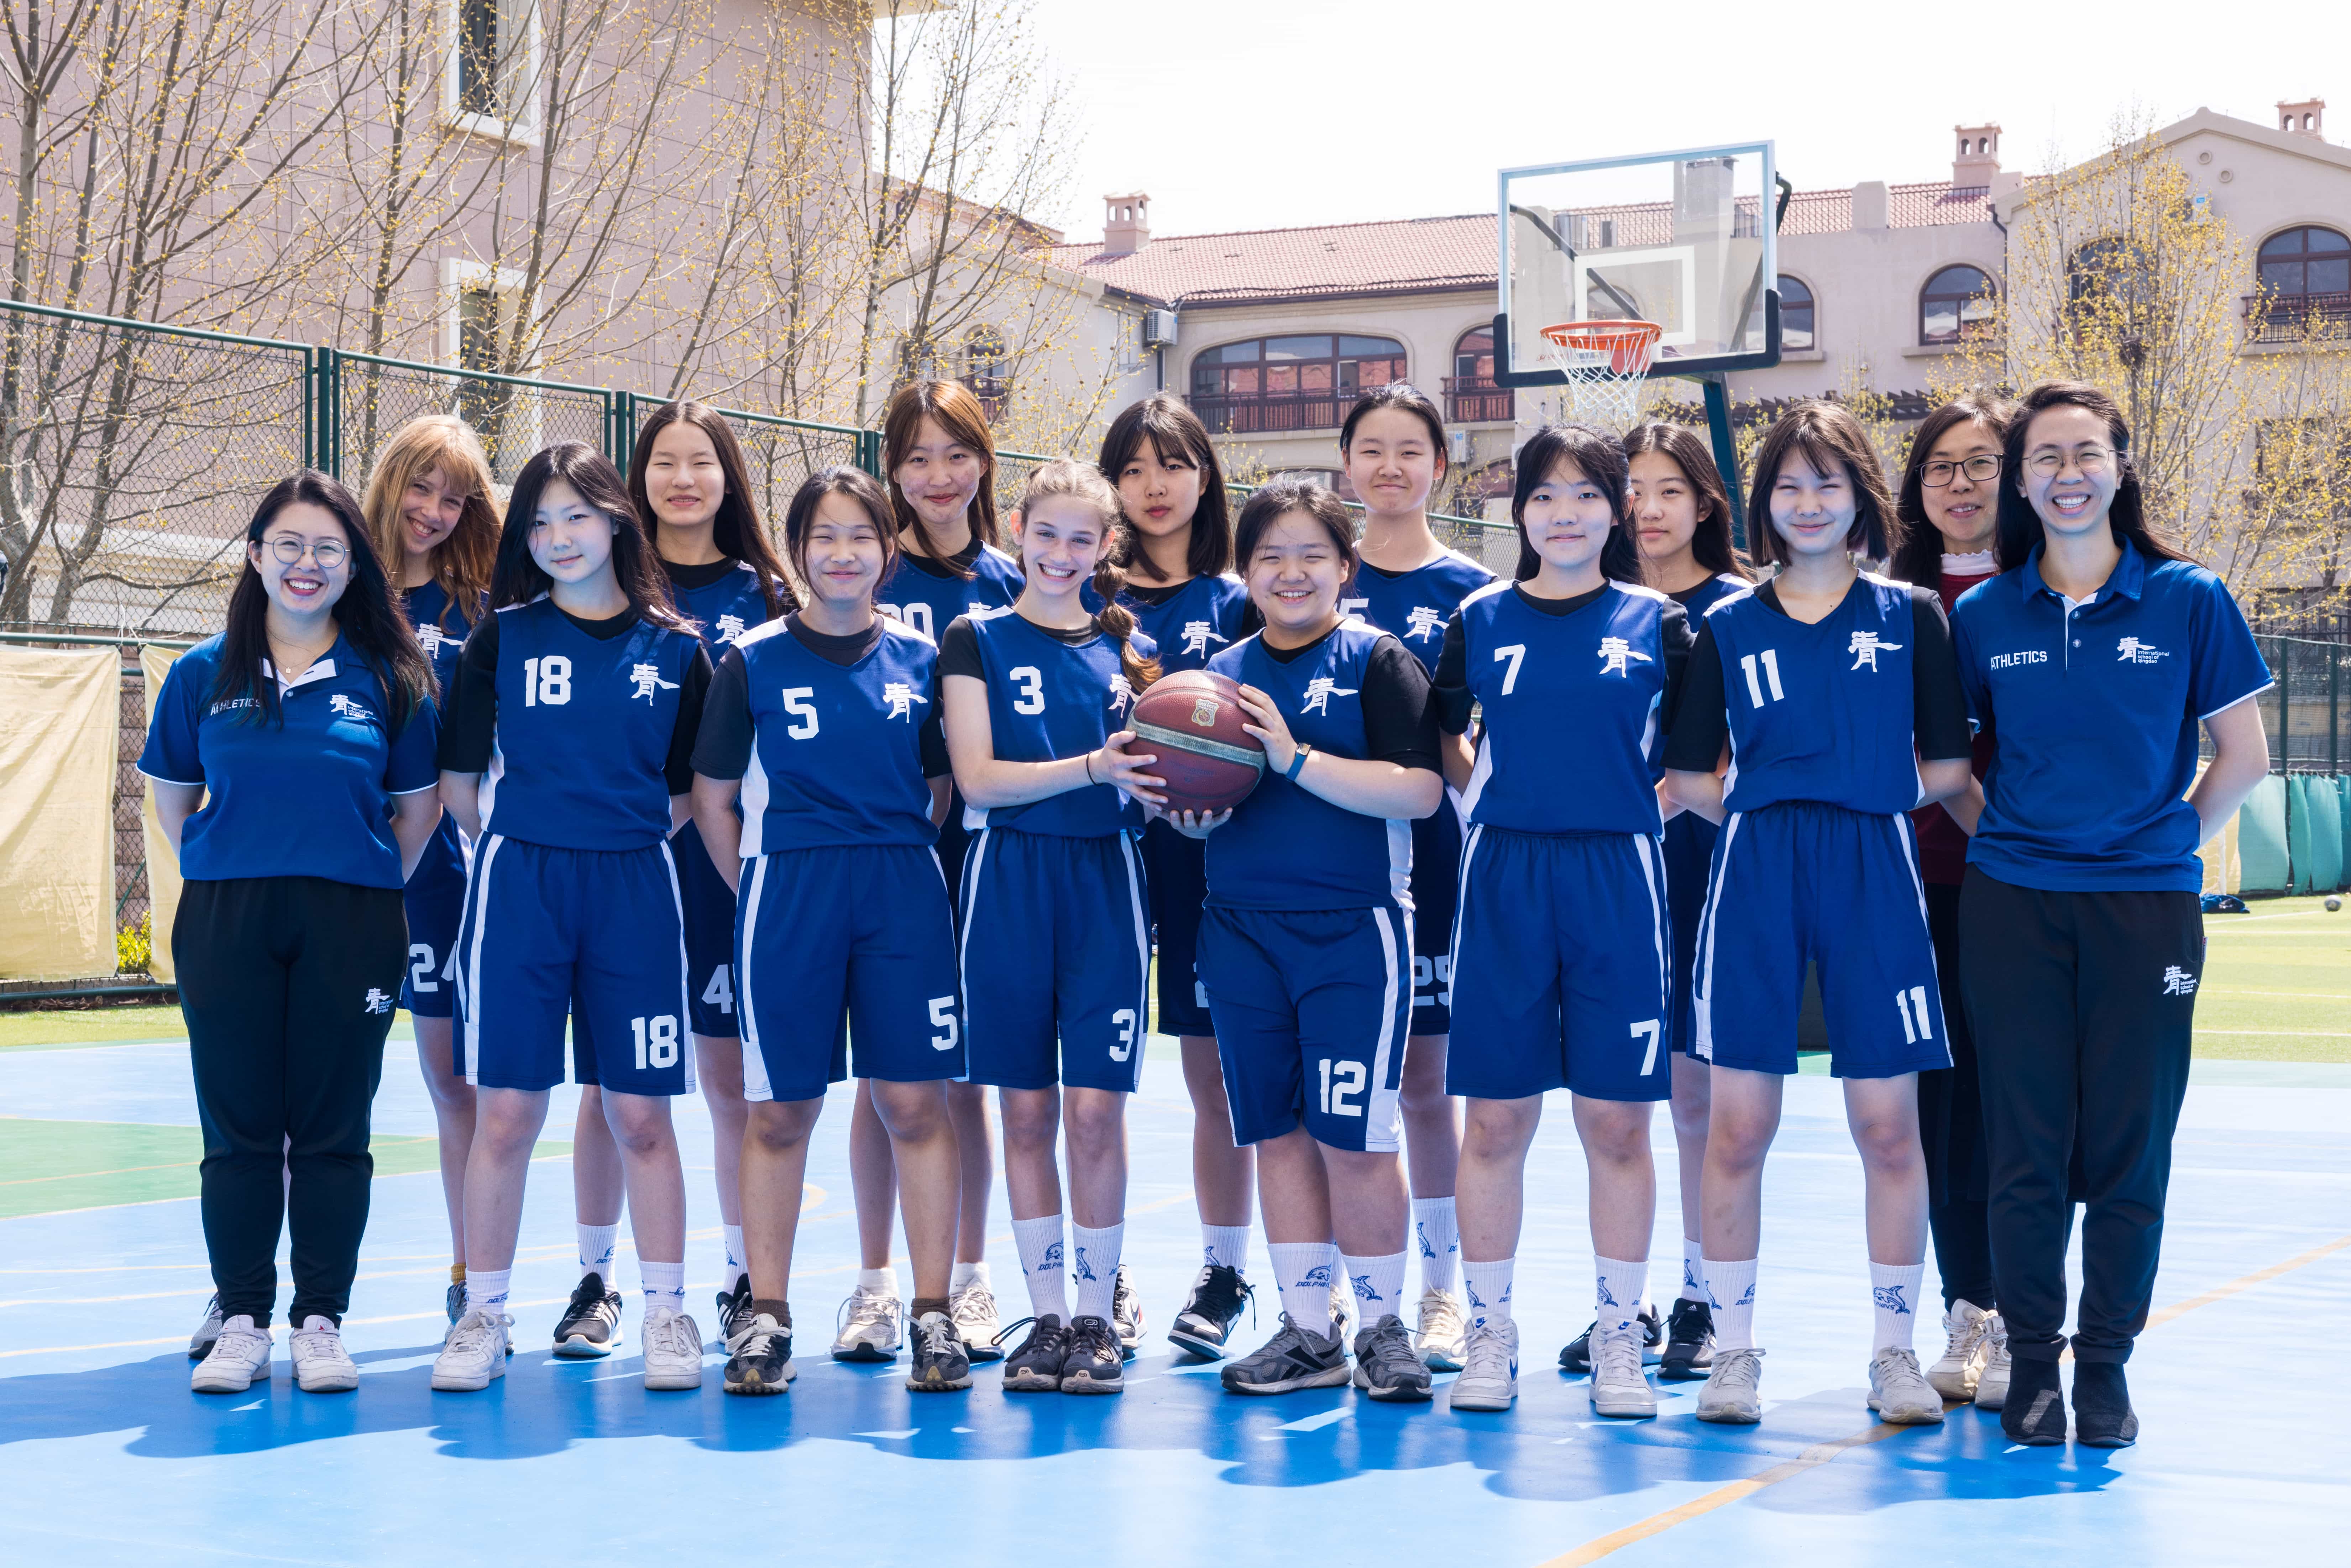 Girls team photo